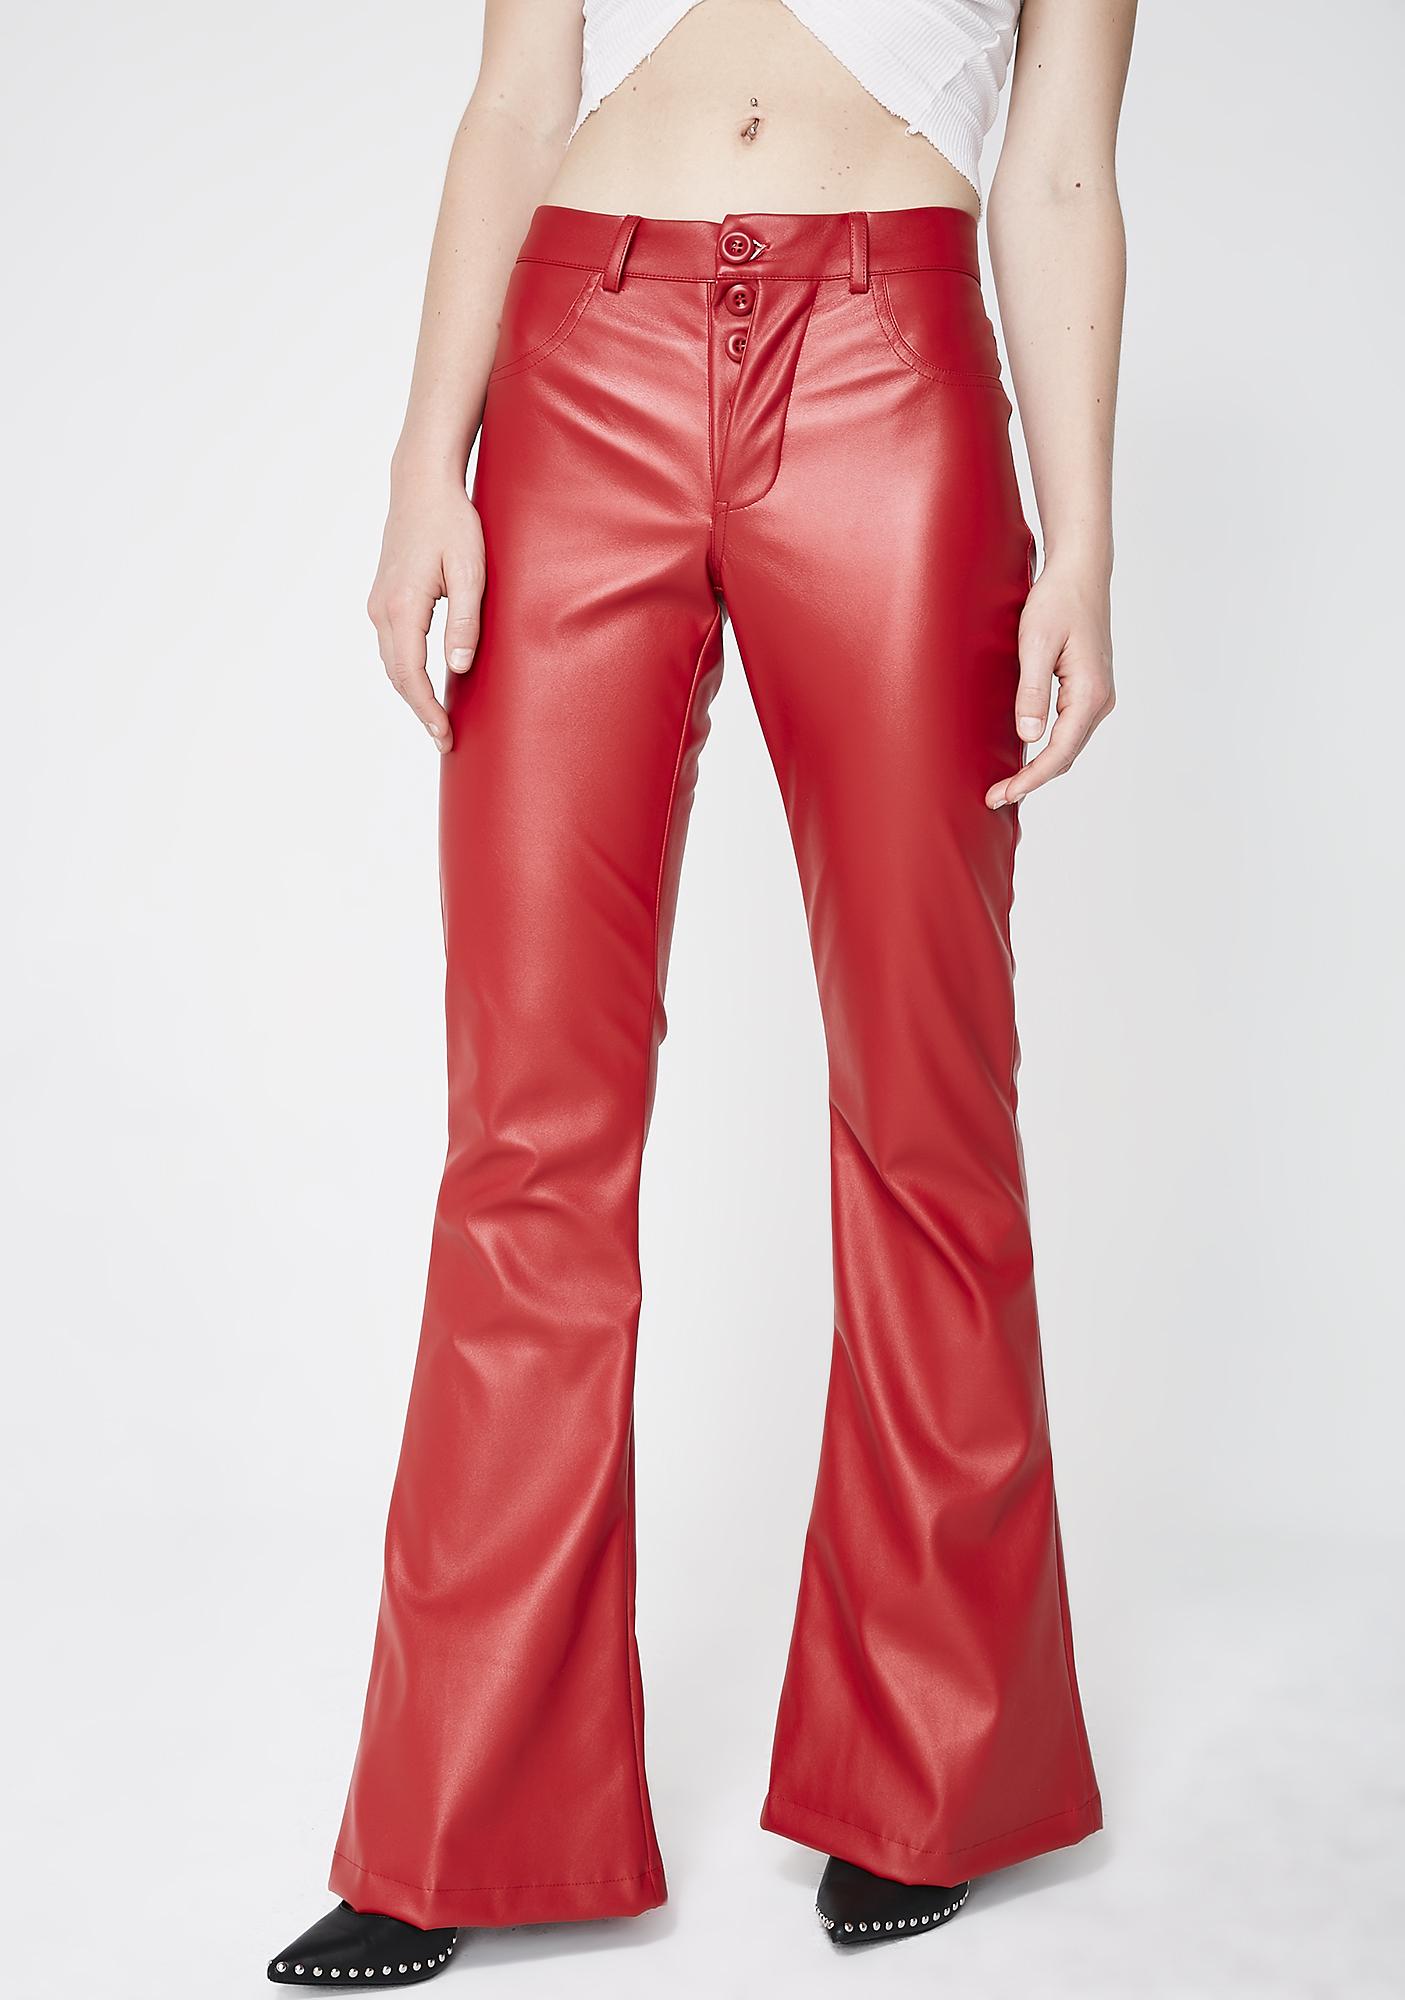 red vegan leather pants